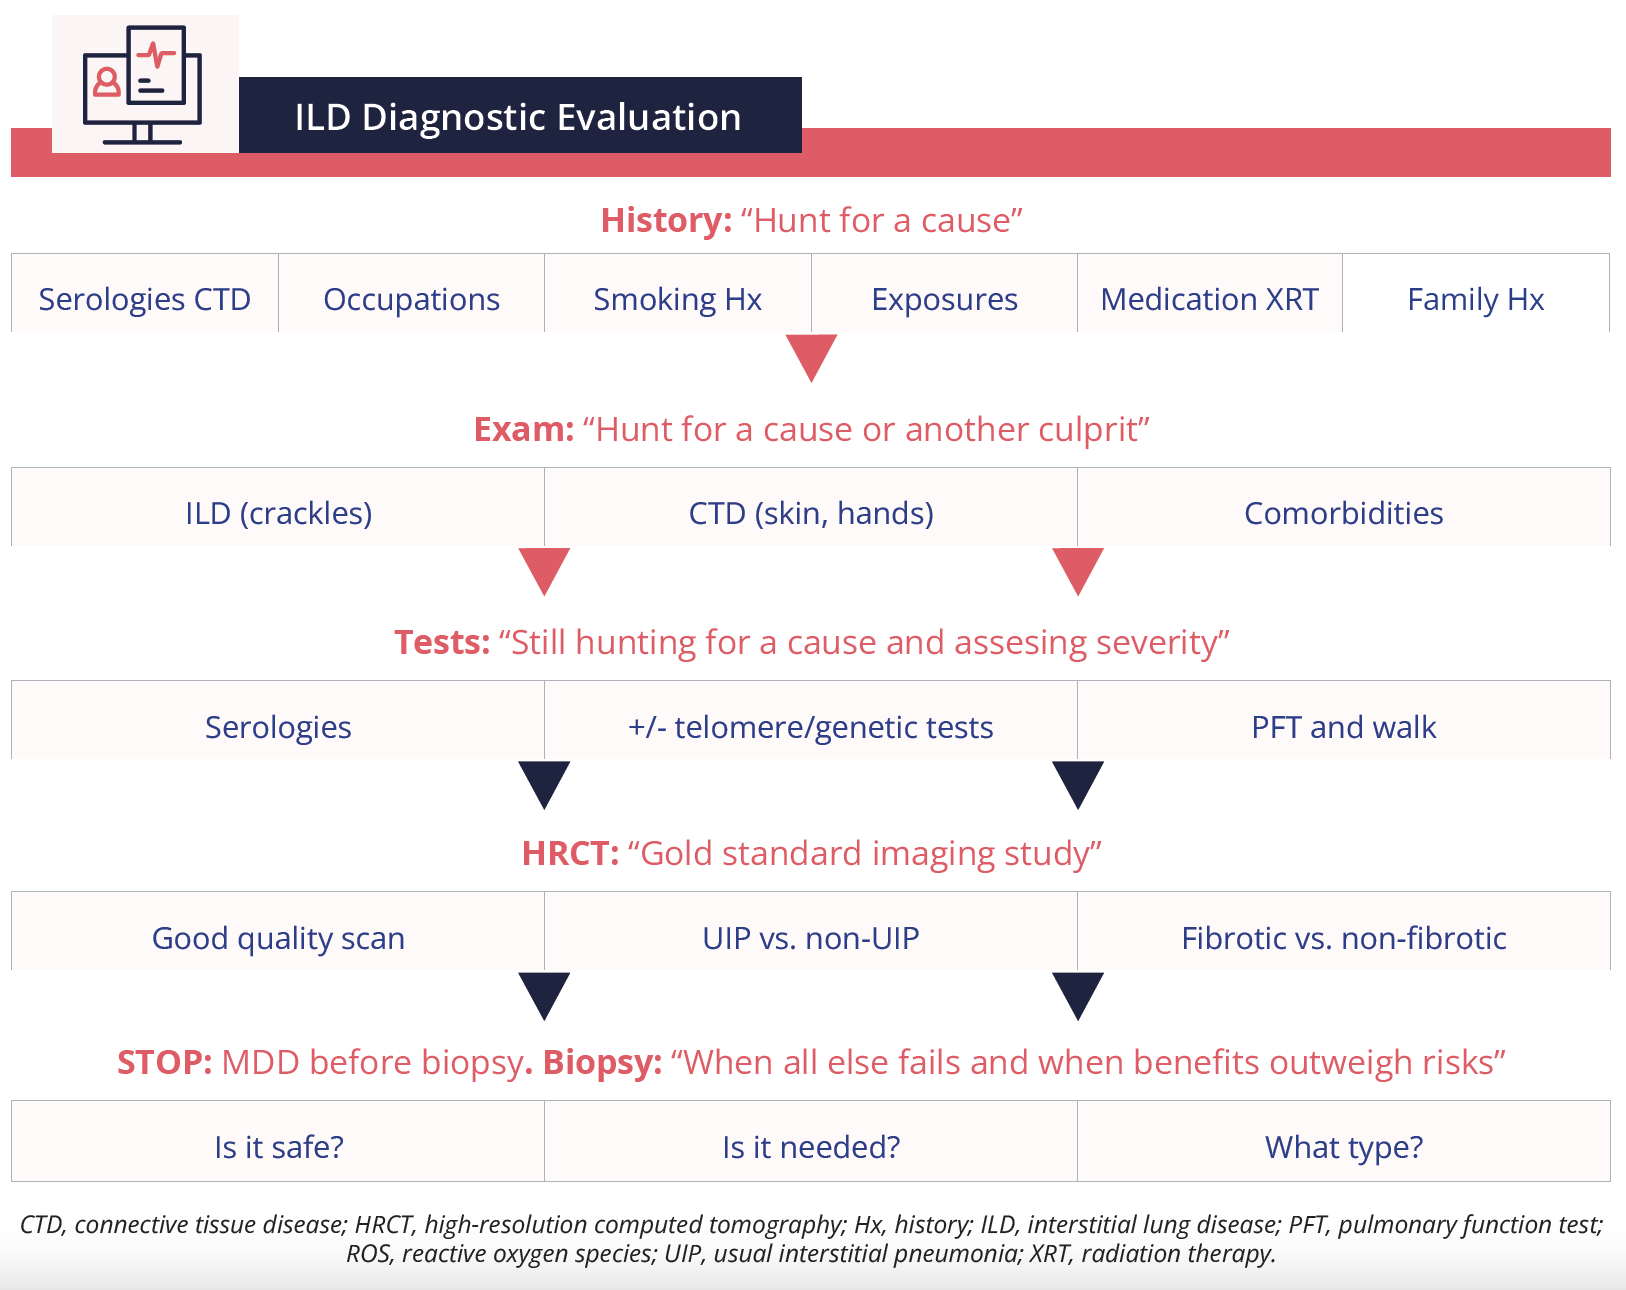 ILD-diagnostic-evaluation-criteria